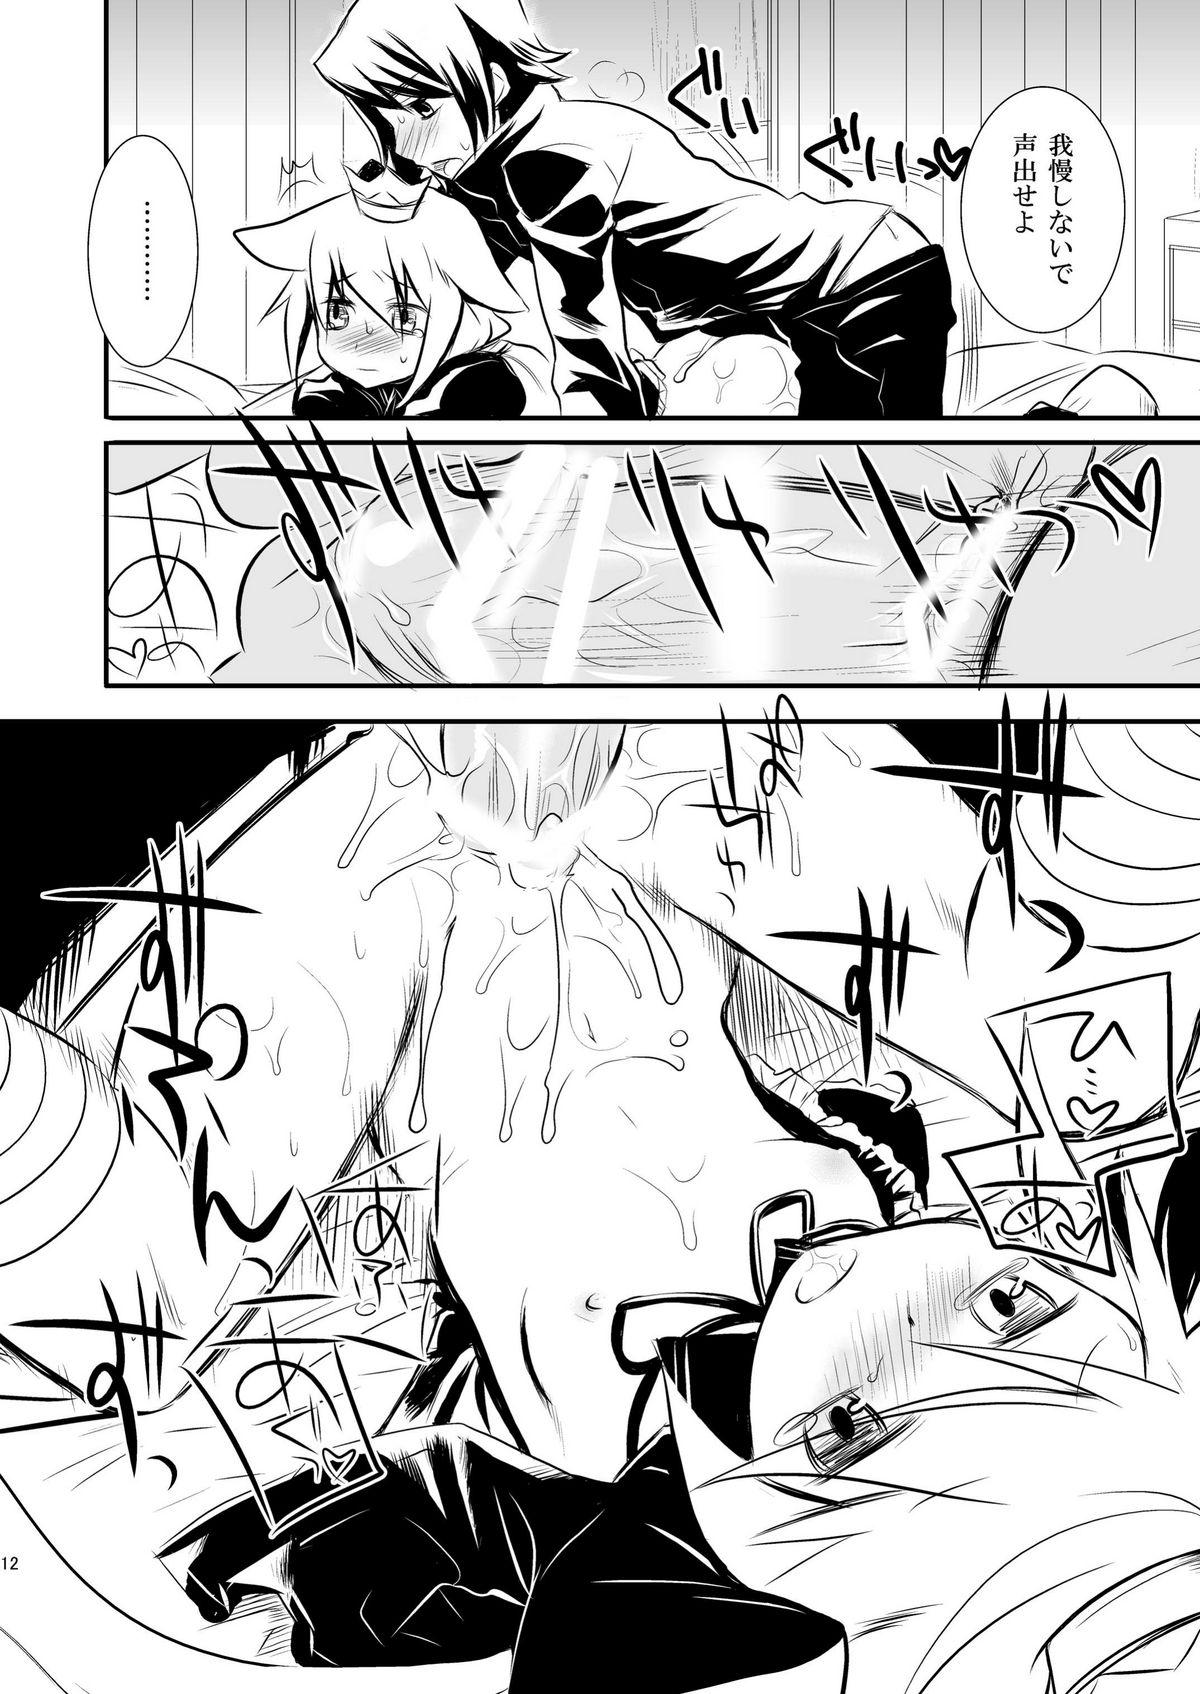 Milk FaP - Fighter and Princess. - 7th dragon Slim - Page 12